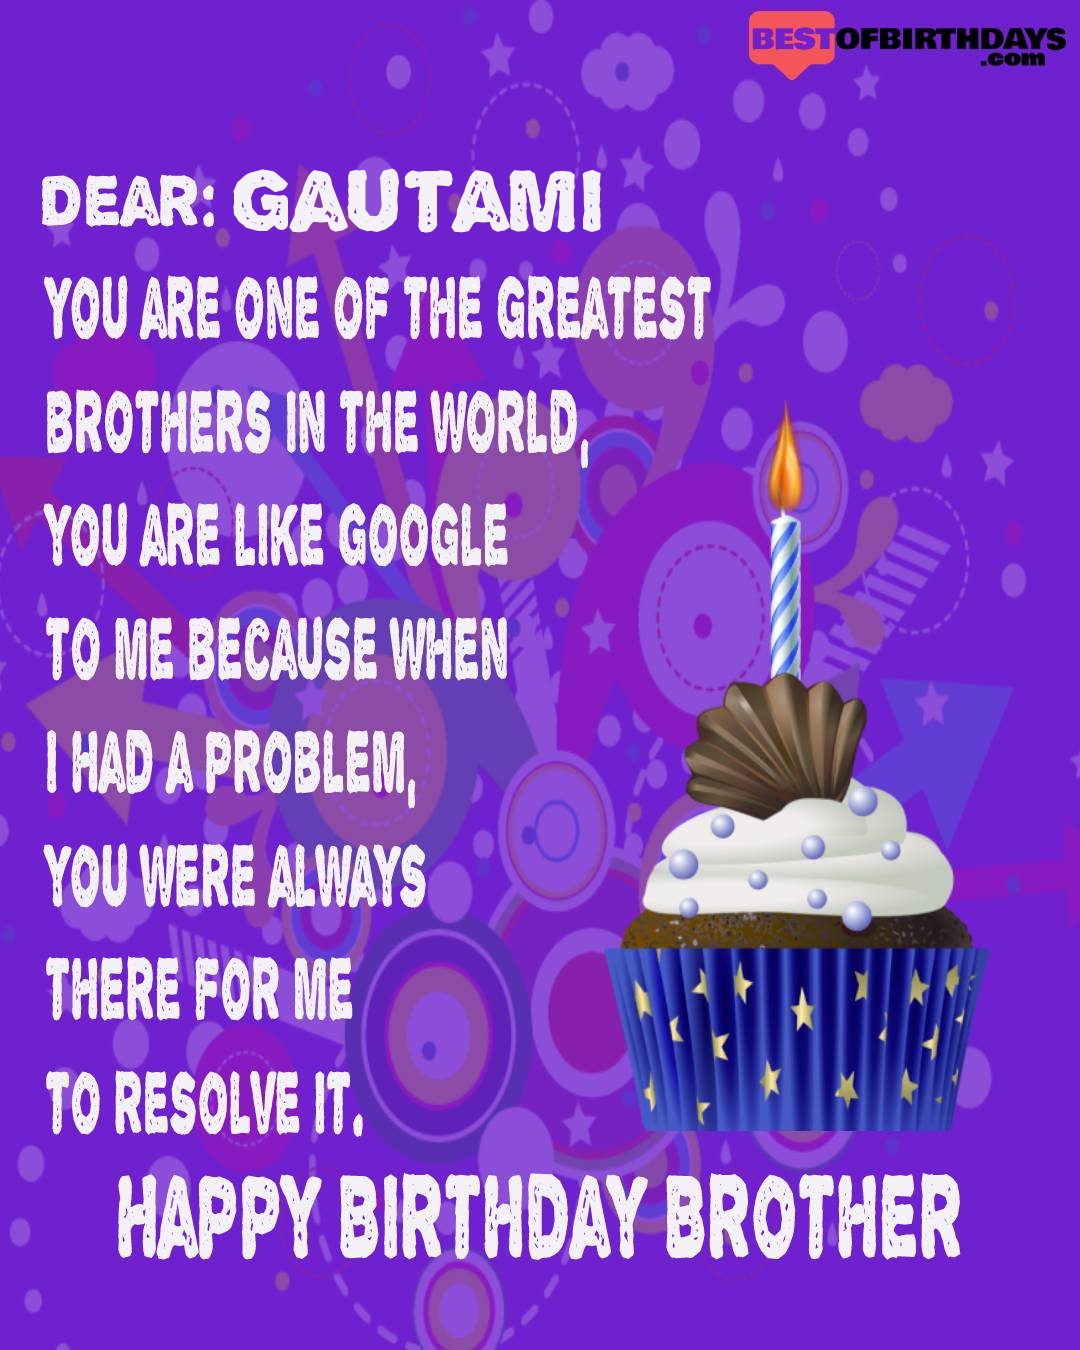 Happy birthday gautami bhai brother bro